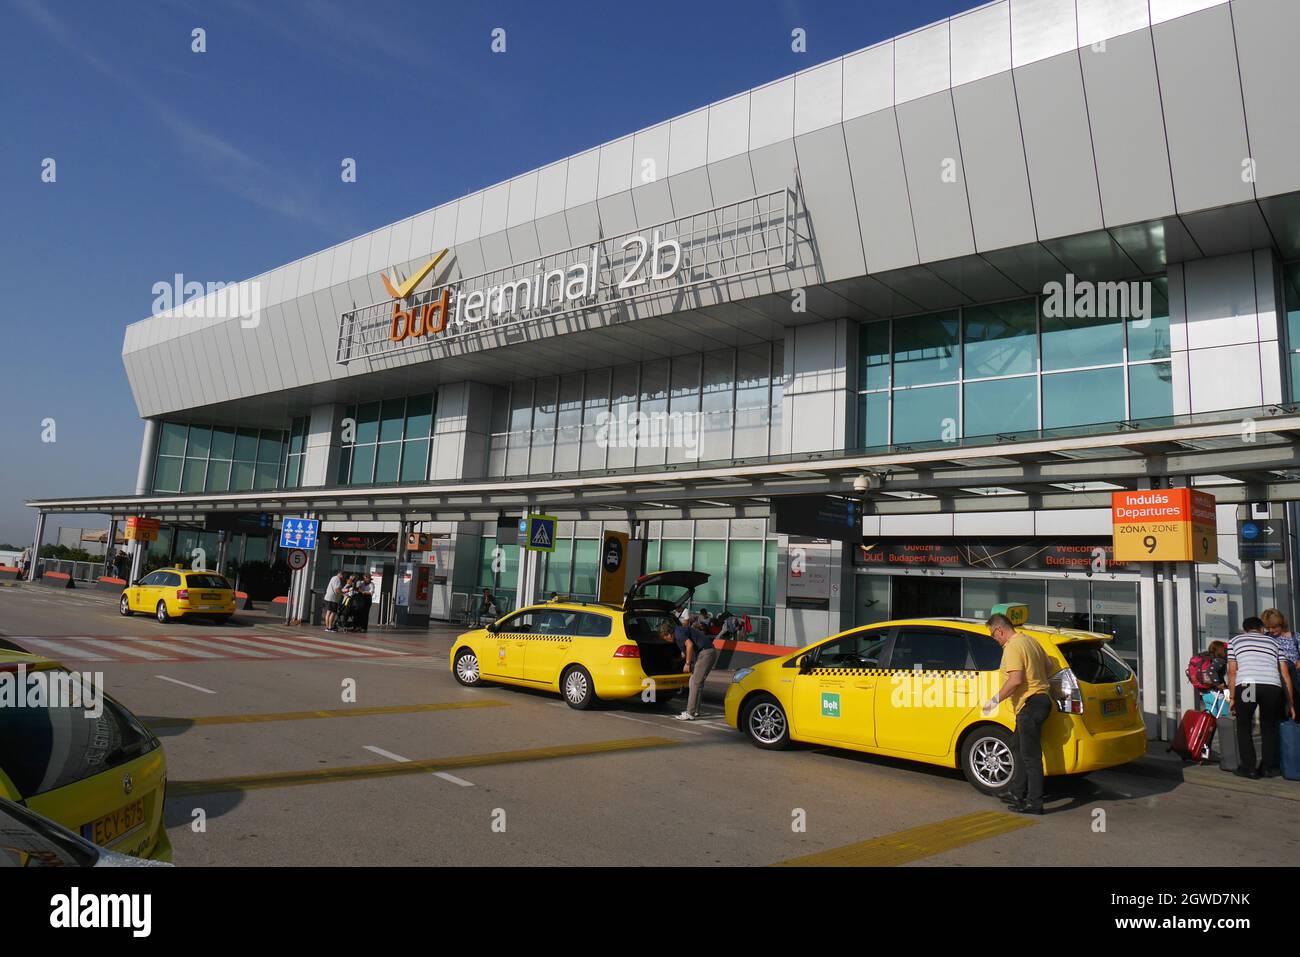 Terminal 2B, Budapest Airport, Budapest, Hungary Stock Photo - Alamy